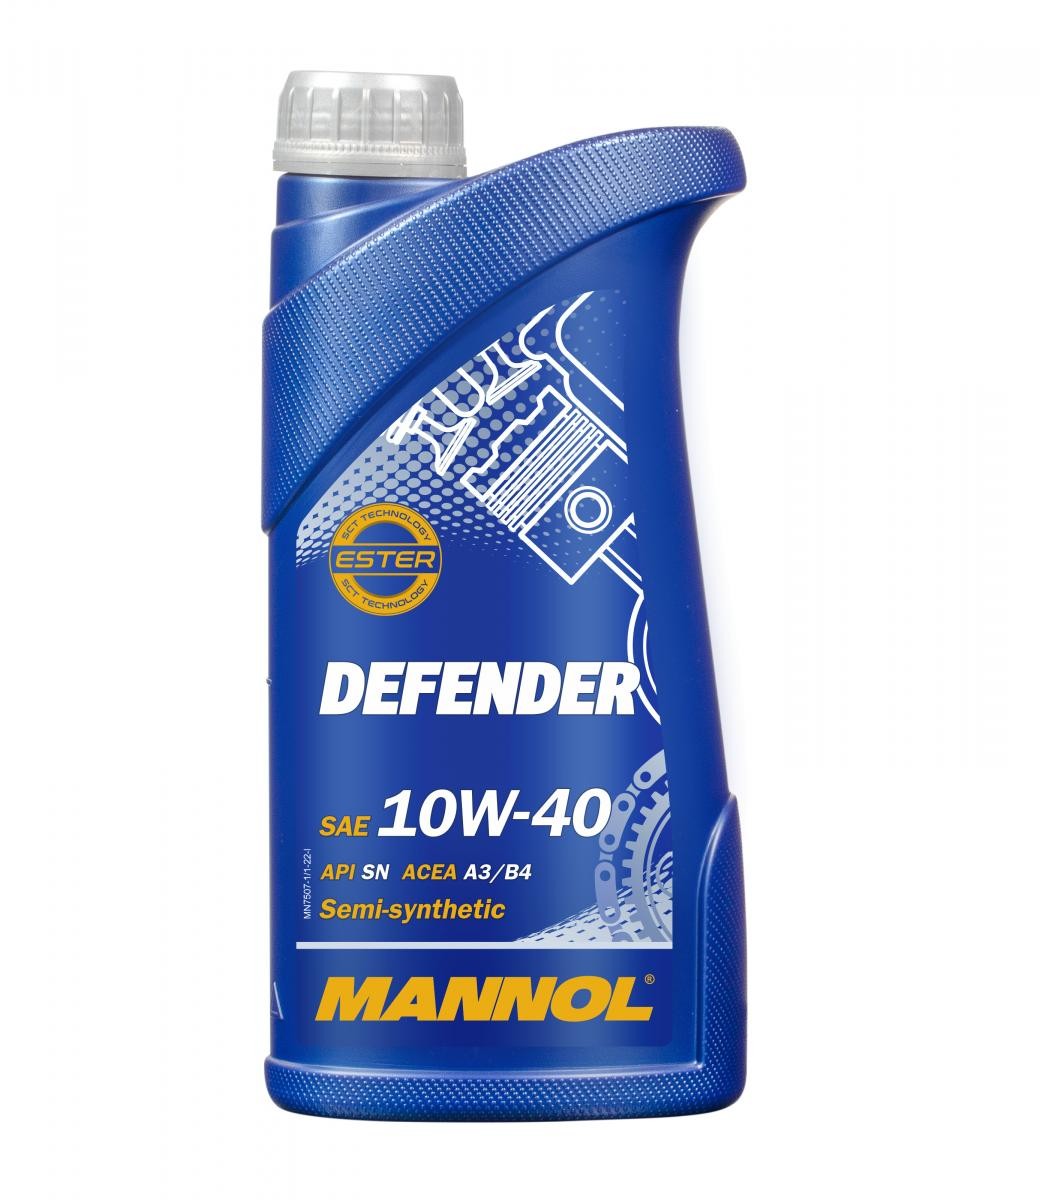 MANNOL DEFENDER MN7507-1 Motorolja 10W-40, 1l, Delsyntetolja